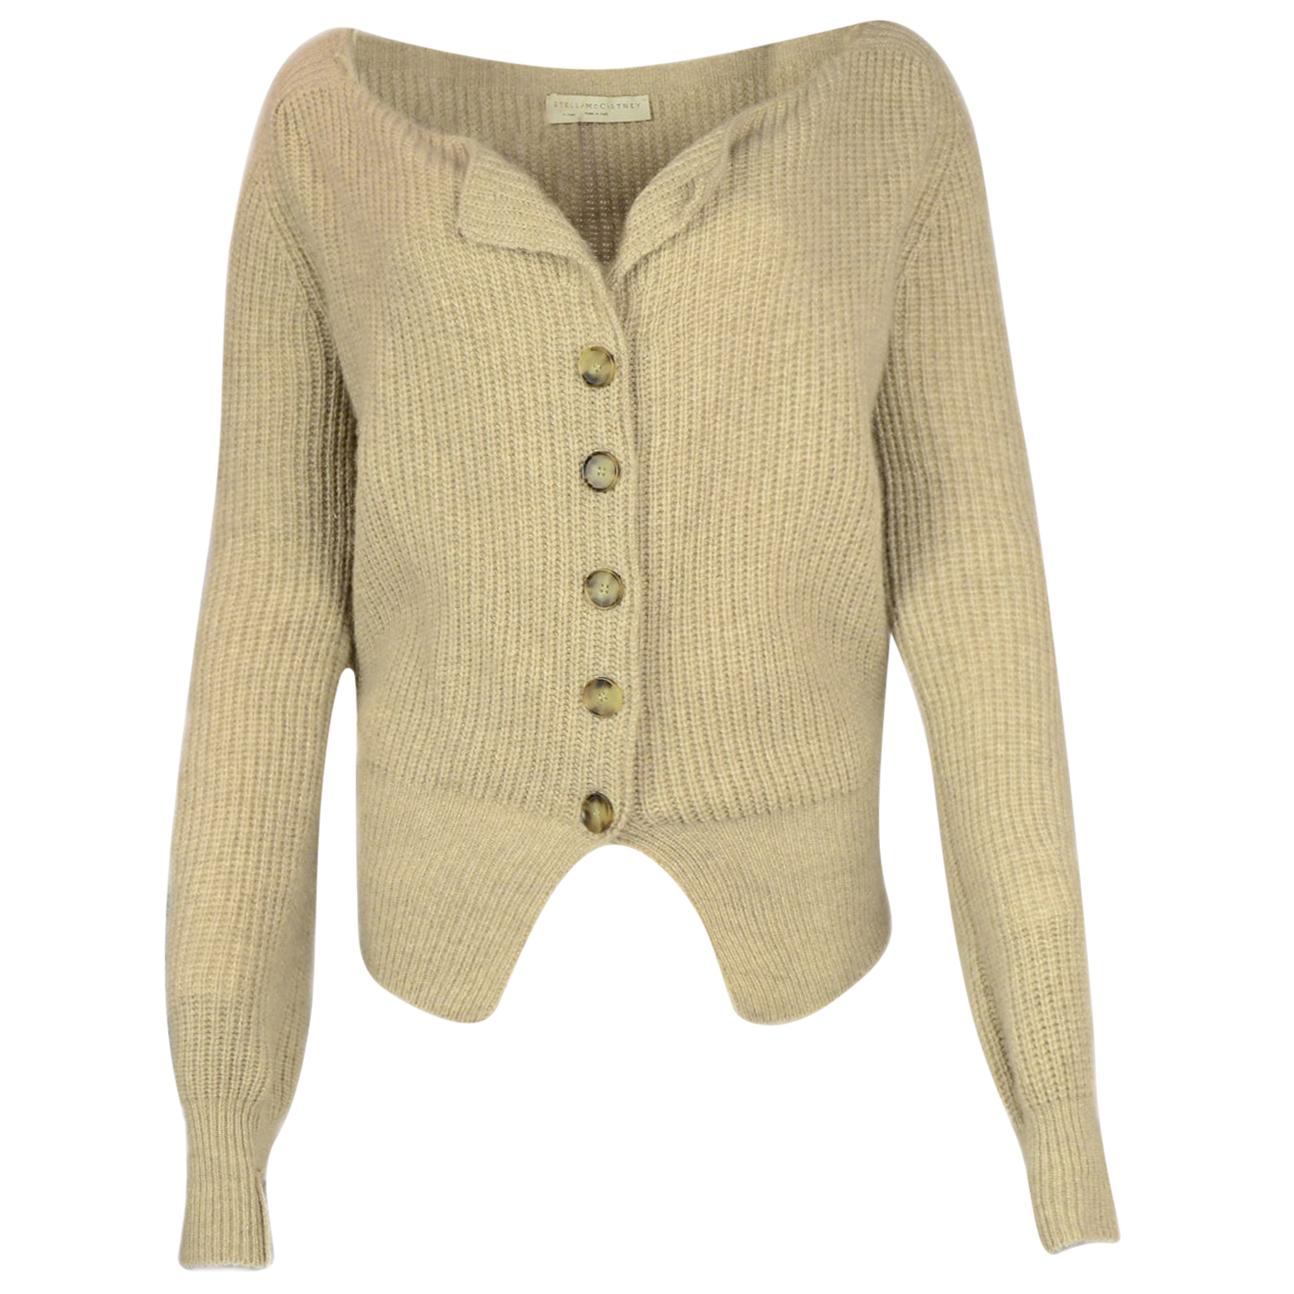 Stella McCartney Beige Knit Cashmere Cardigan Sweater sz IT38 